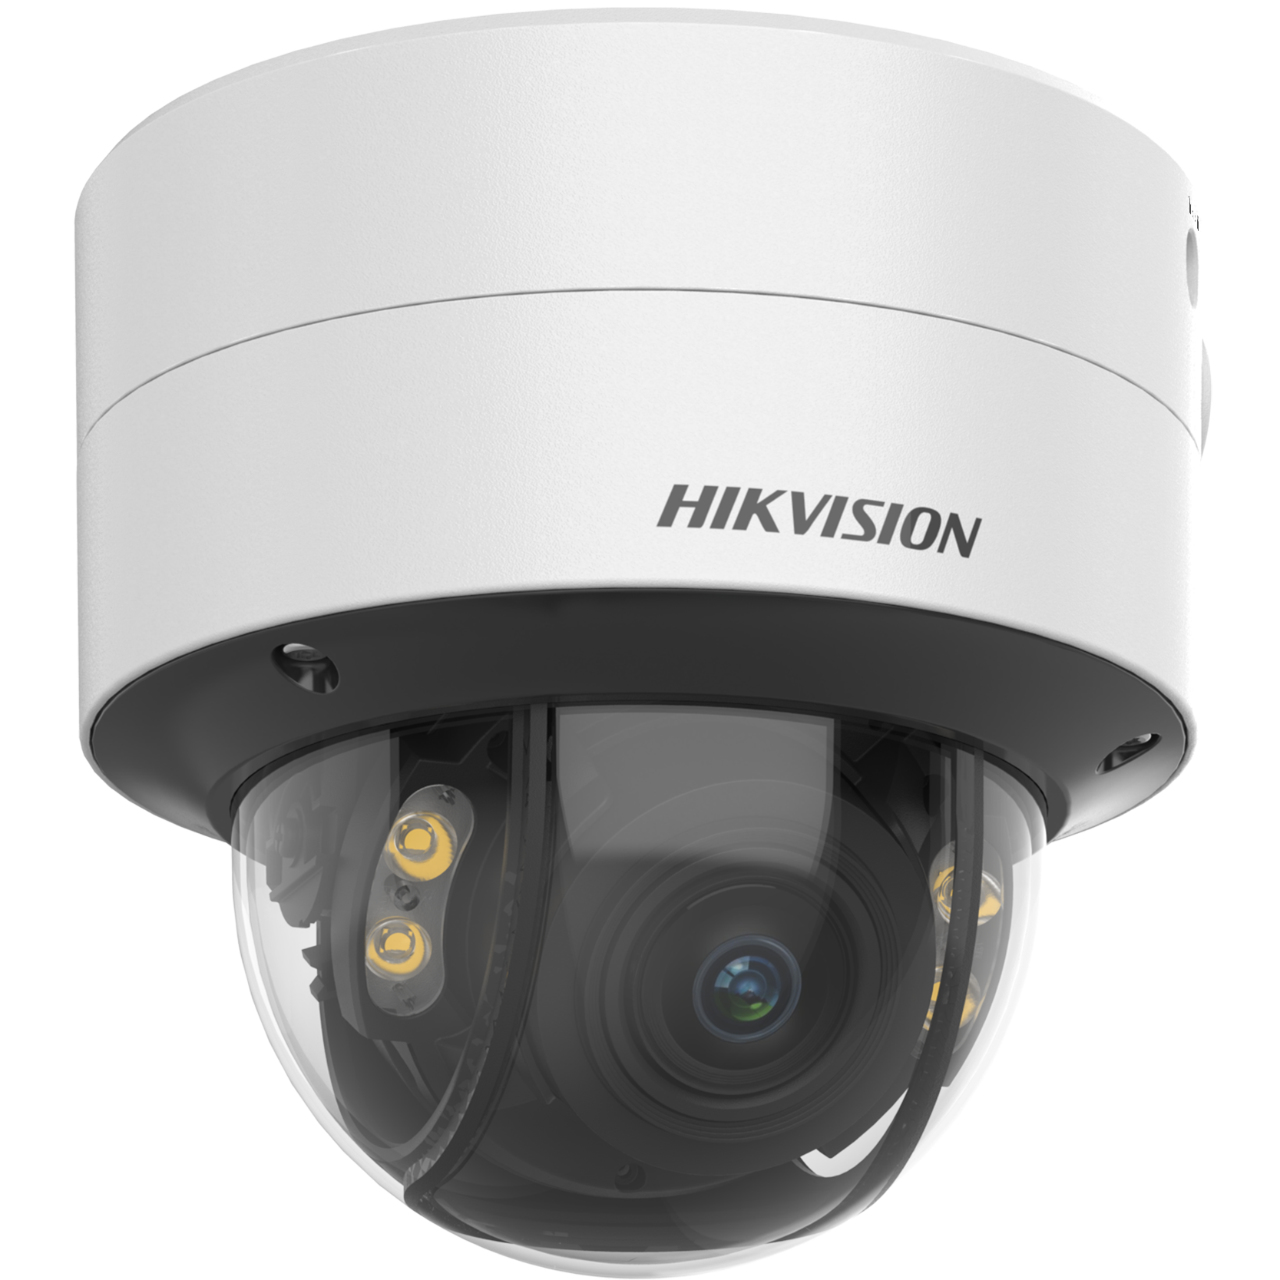 Hikvision 4 MP ColorVu Motorized Varifocal Dome Network Camera